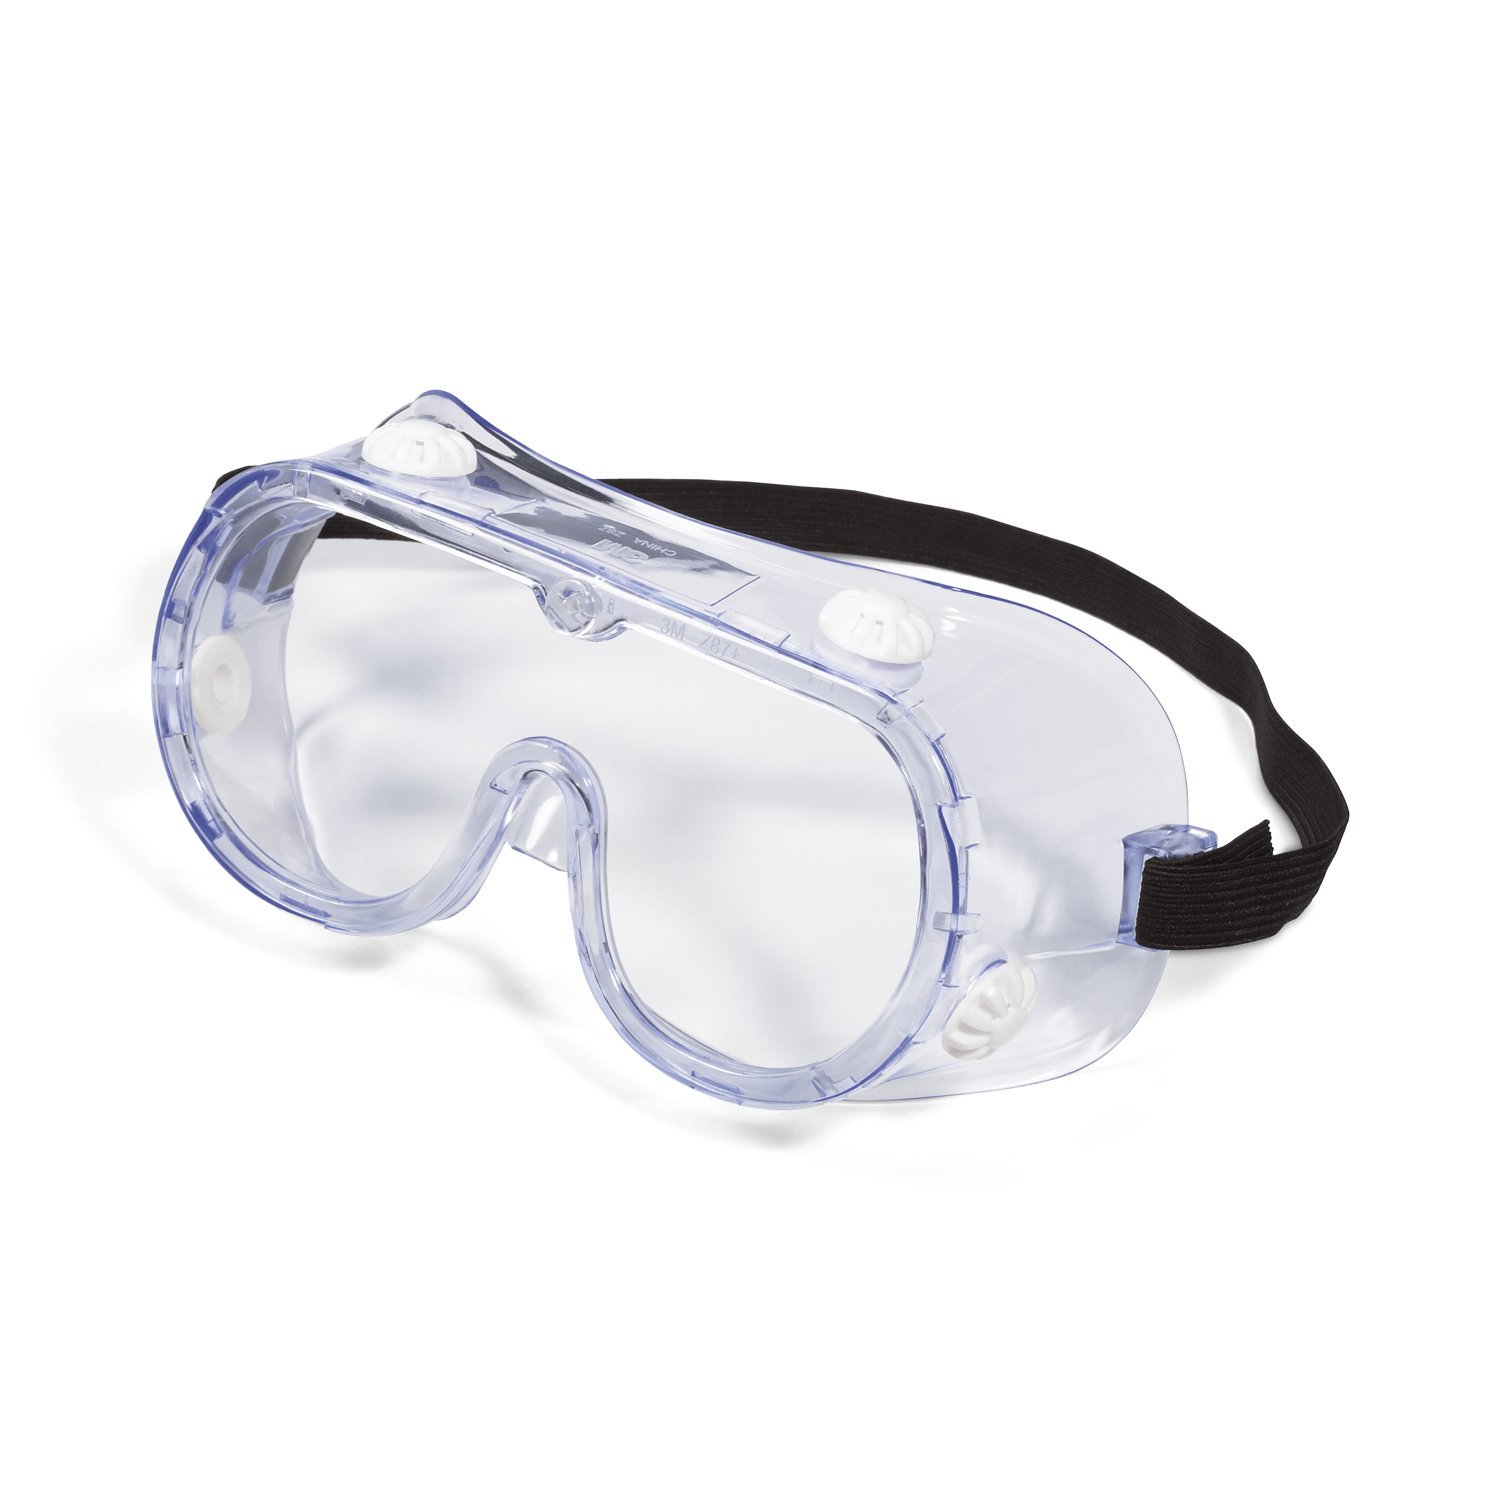 TEKK Protection against Chemical Splash and Impact Goggle